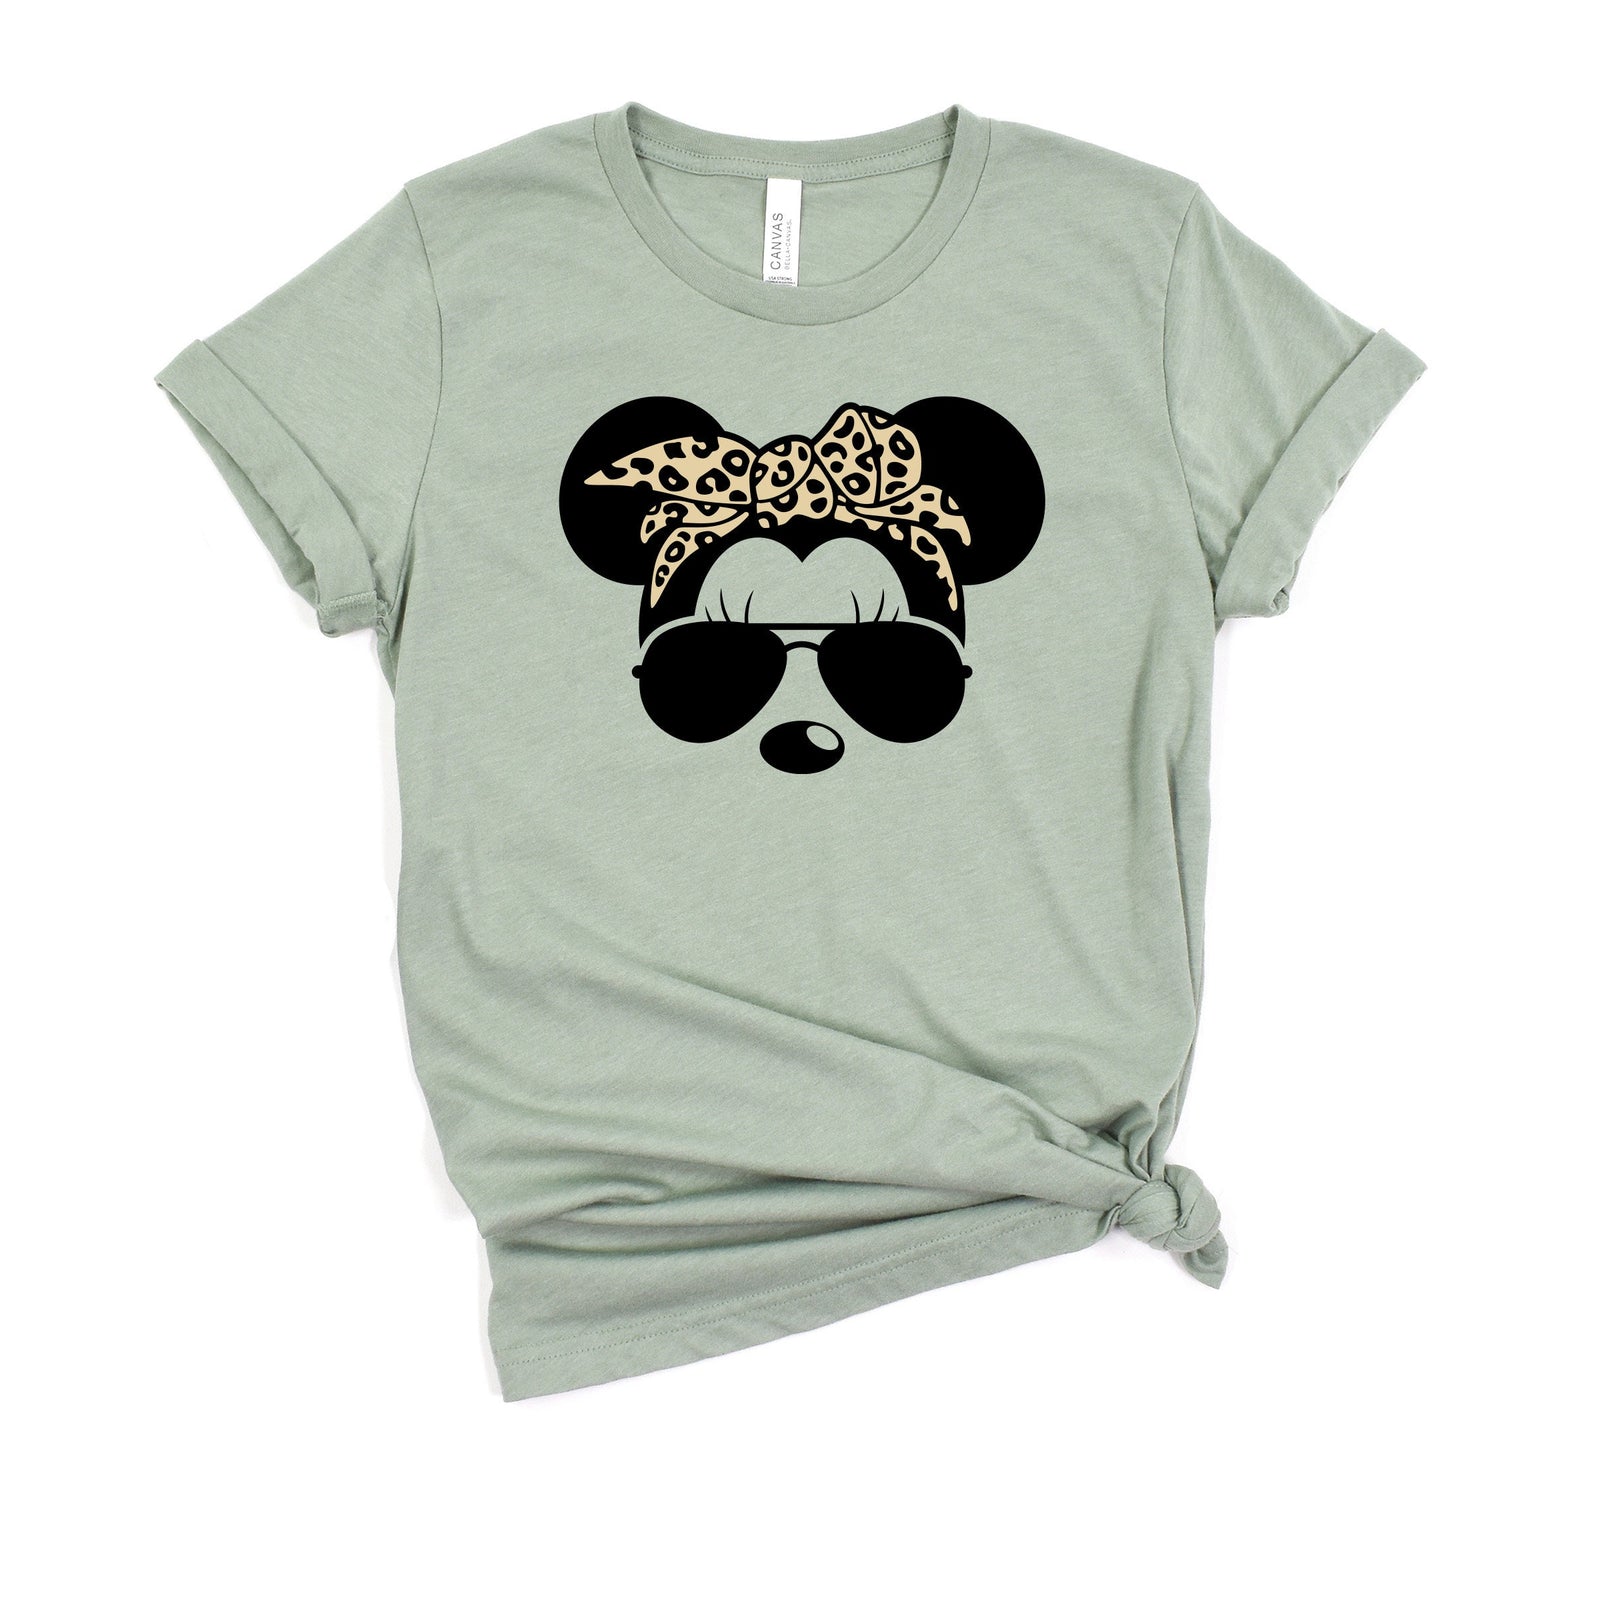 Leopard Minnie MouseT Shirt -Animal Print Bandana - Disney Trip Matching Shirts - Cheetah Safari Mode Shirt